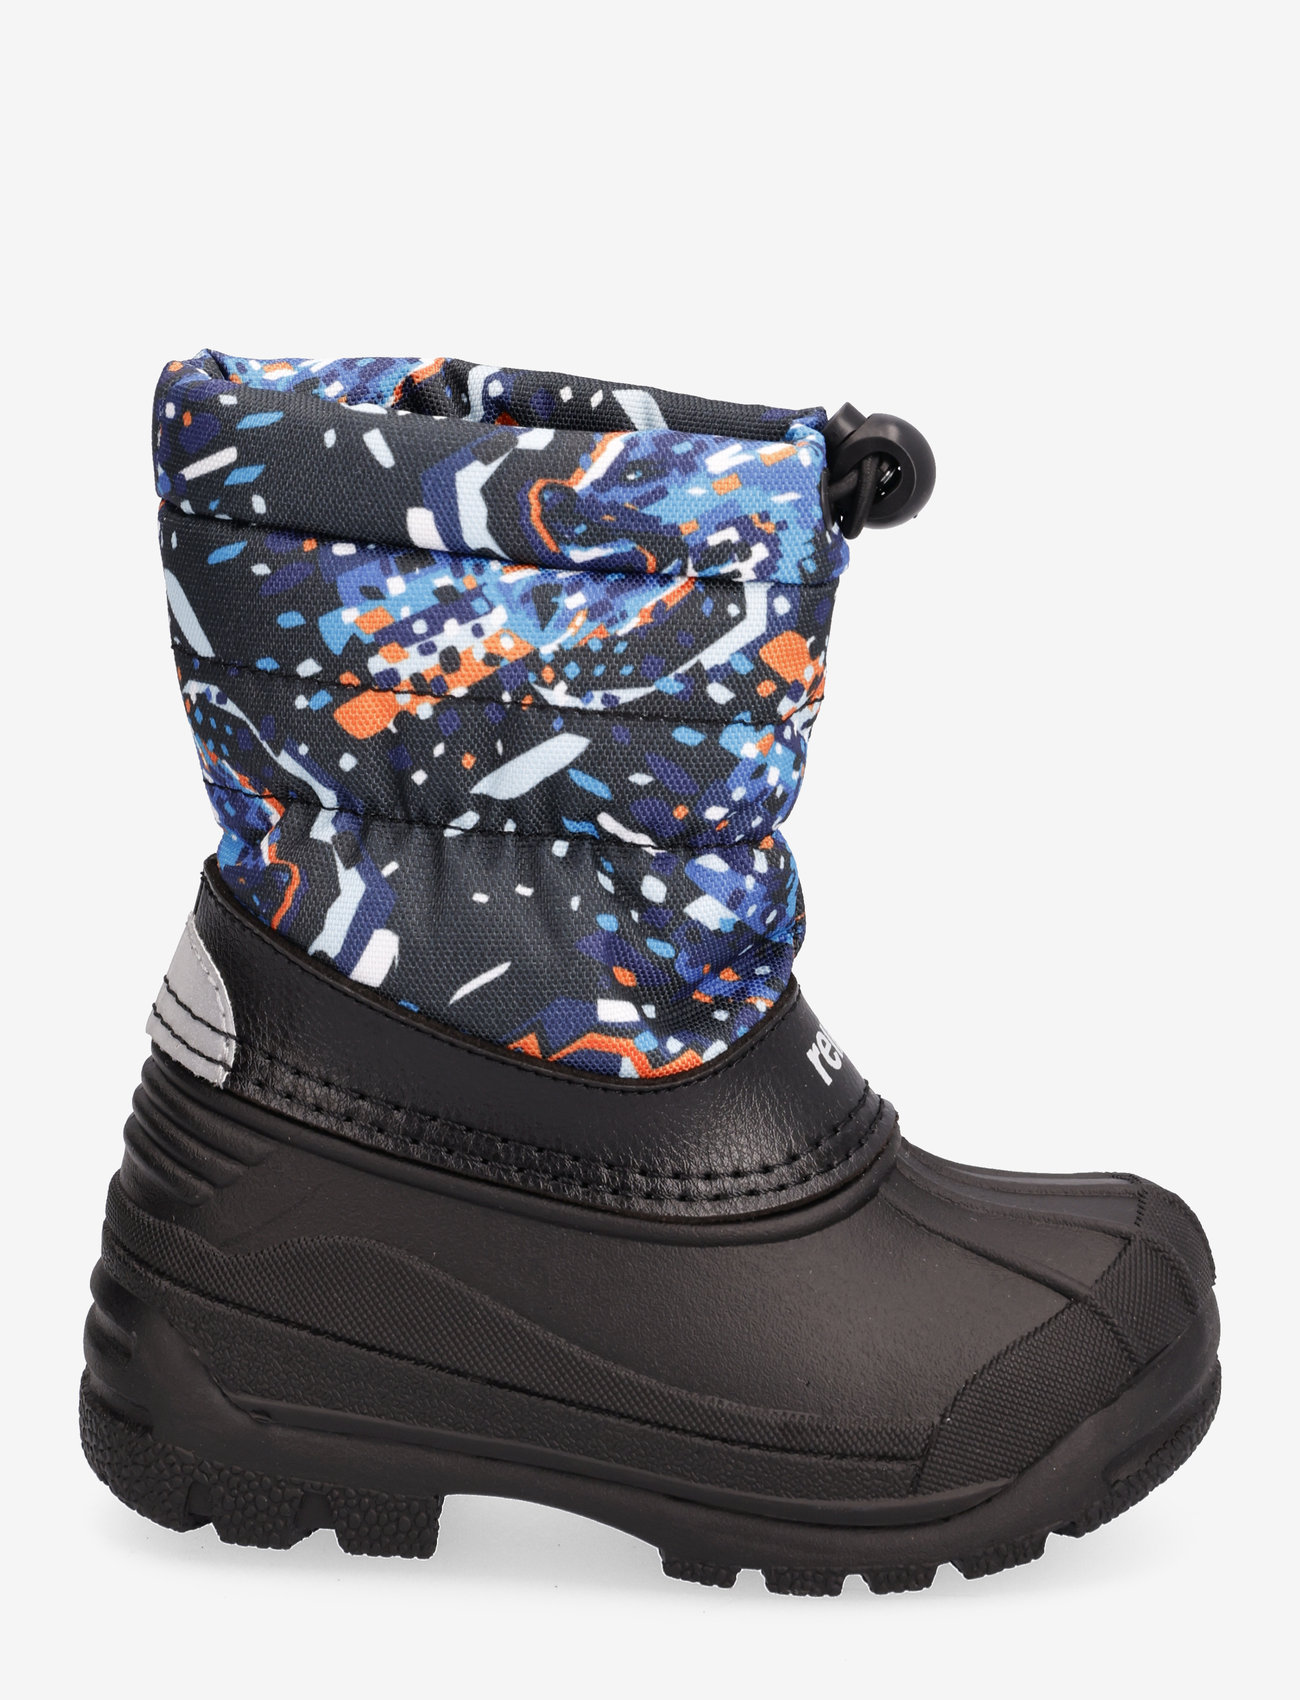 Reima - Winter boots, Nefar - lapset - true blue - 1